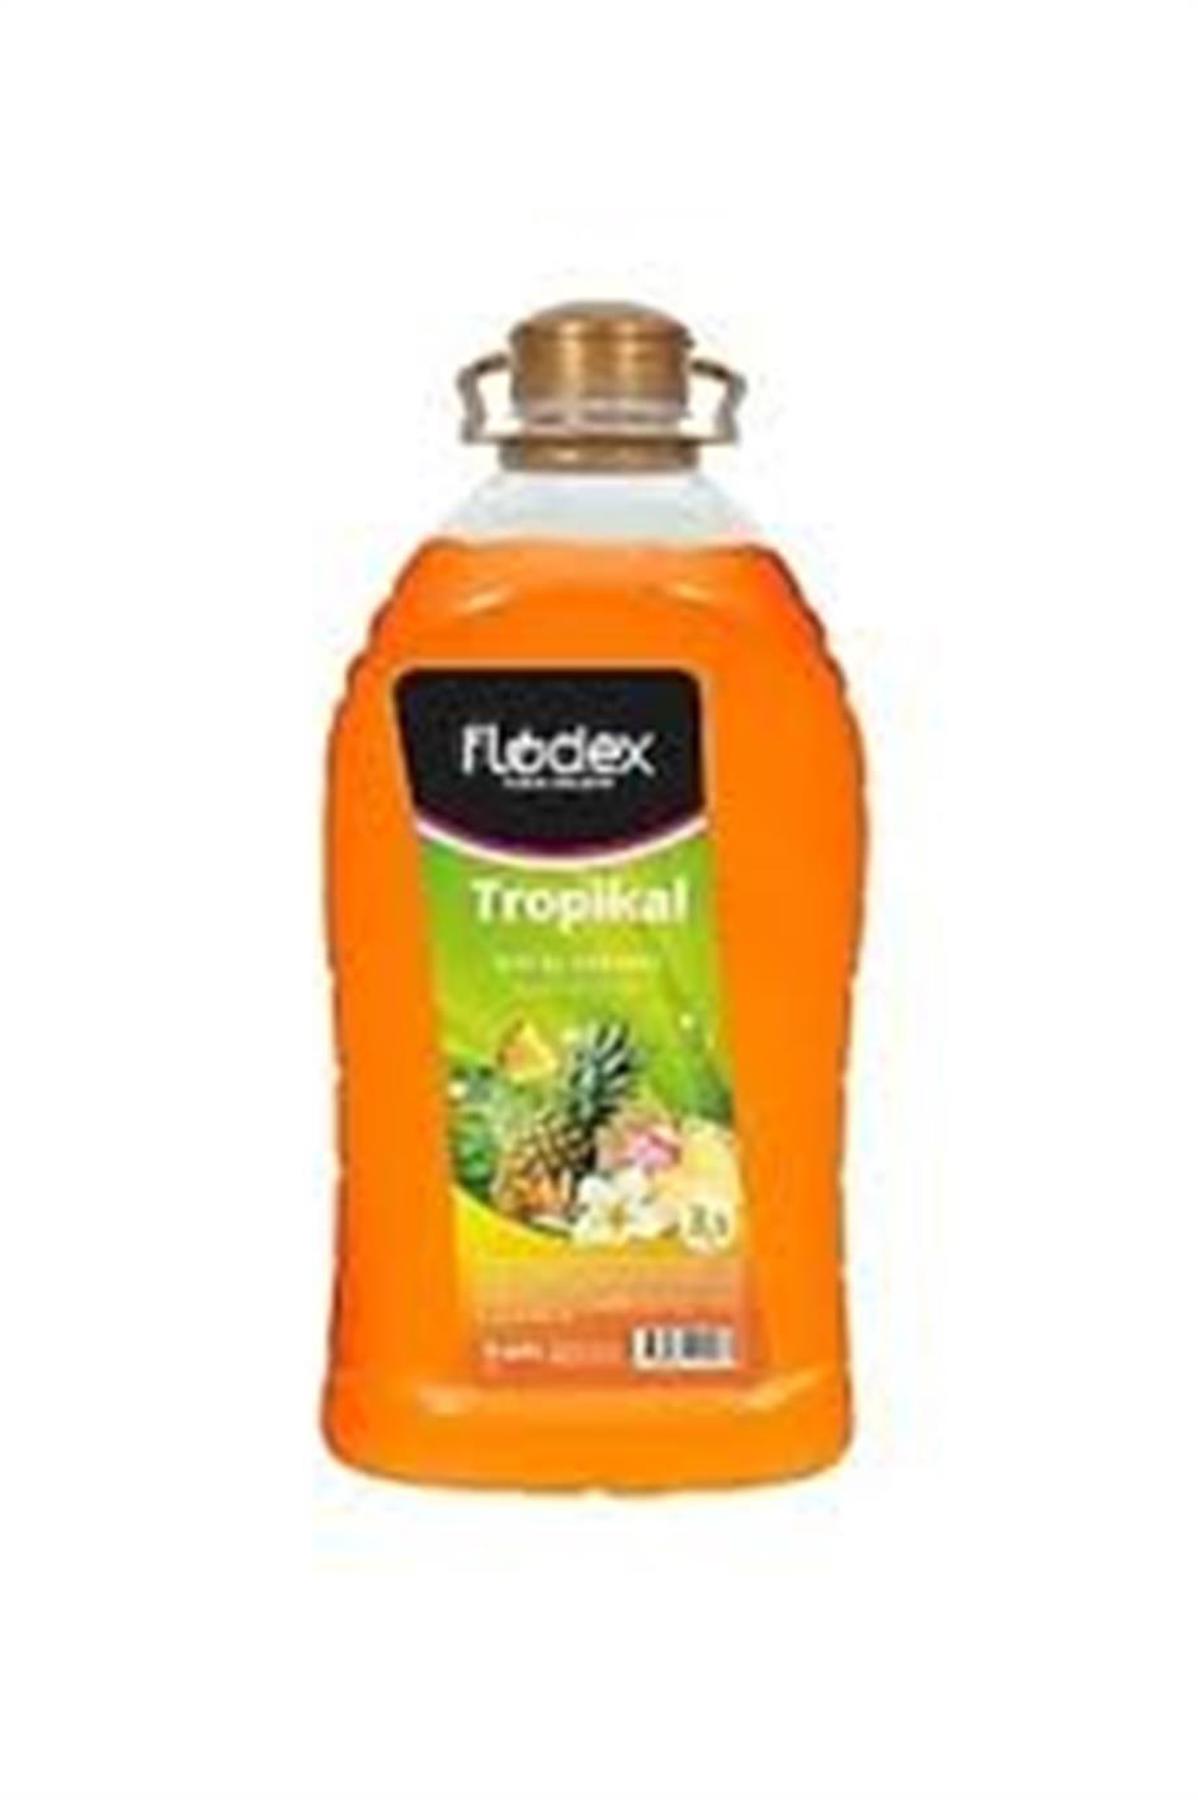 Flodex Tropikal Sabun 3 lt